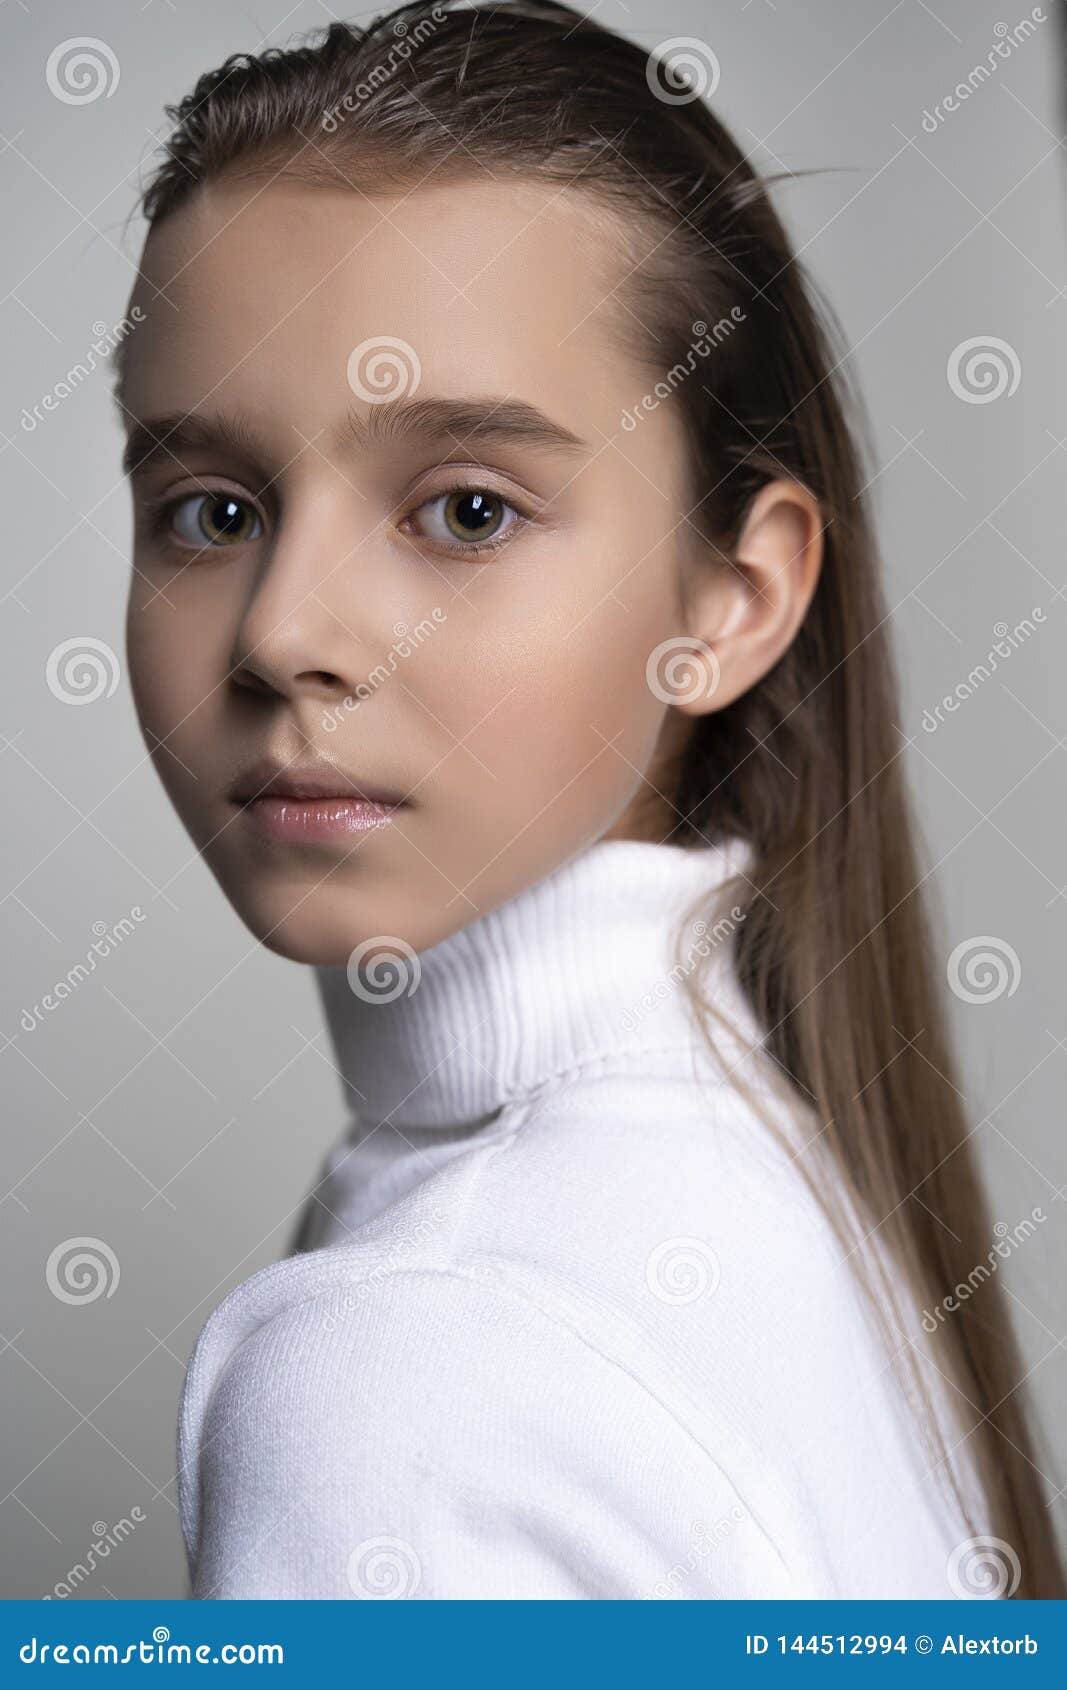 Portrait of a Cute Teen Girl Wearing a White Turtleneck Sweater